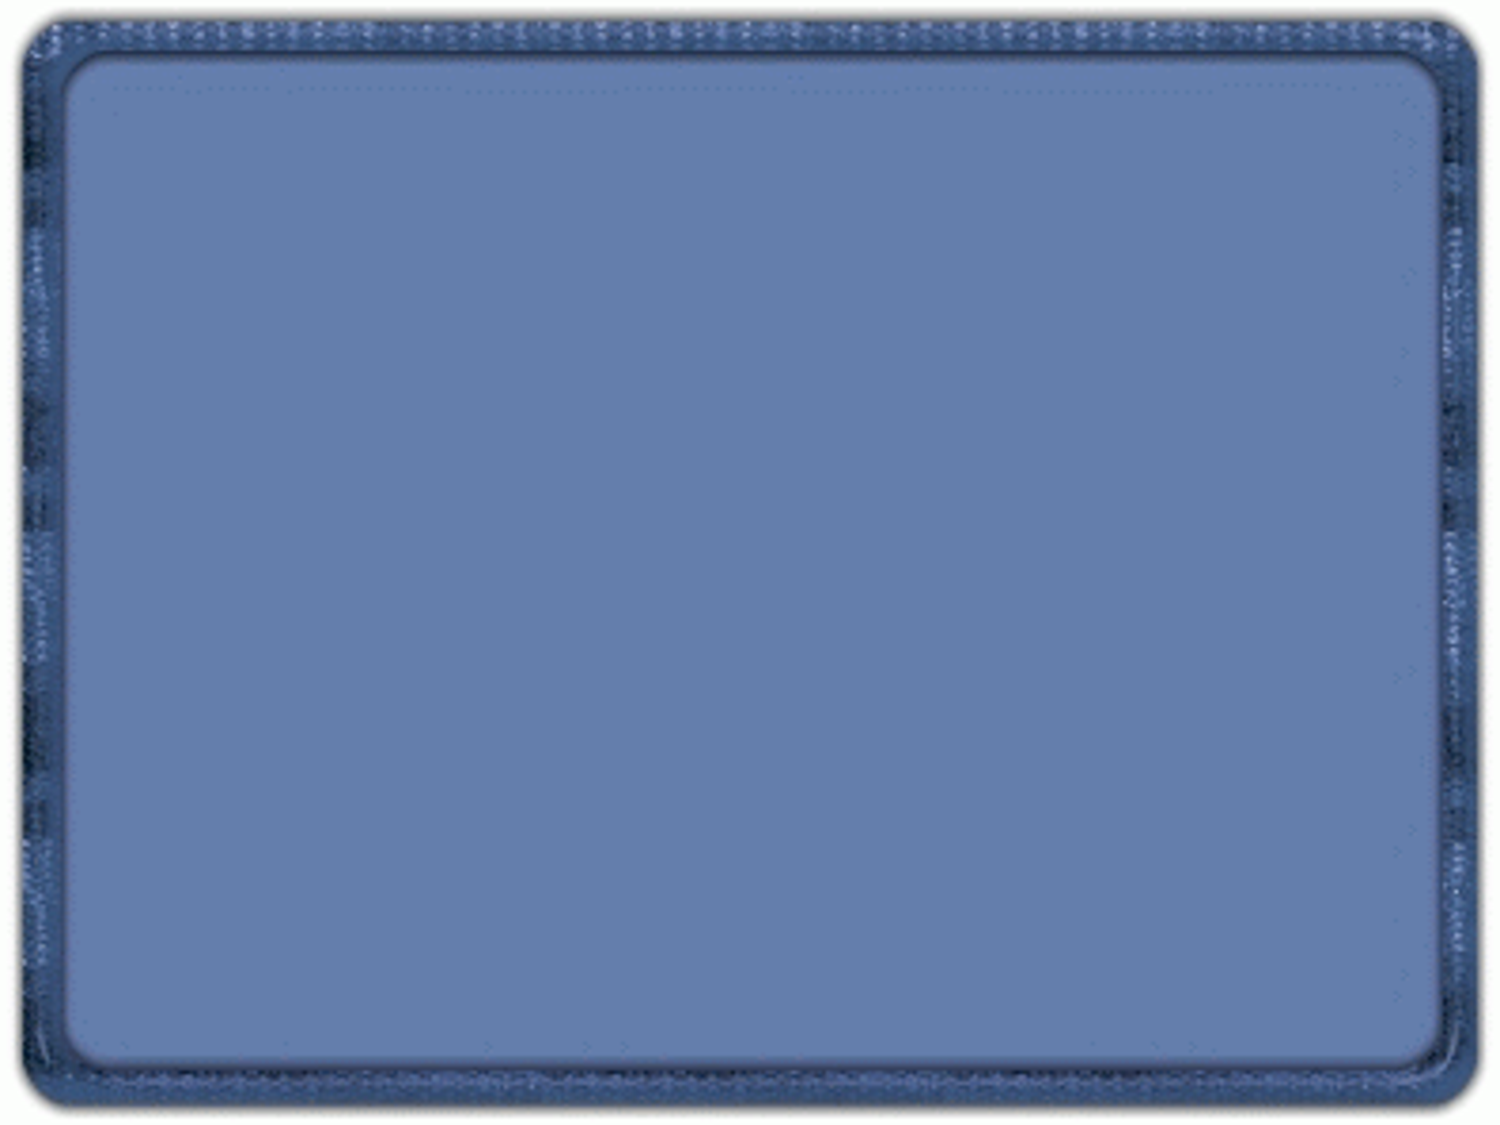 Free Powerpoint Presentation Blue Frame Background - ClipArt Best ...